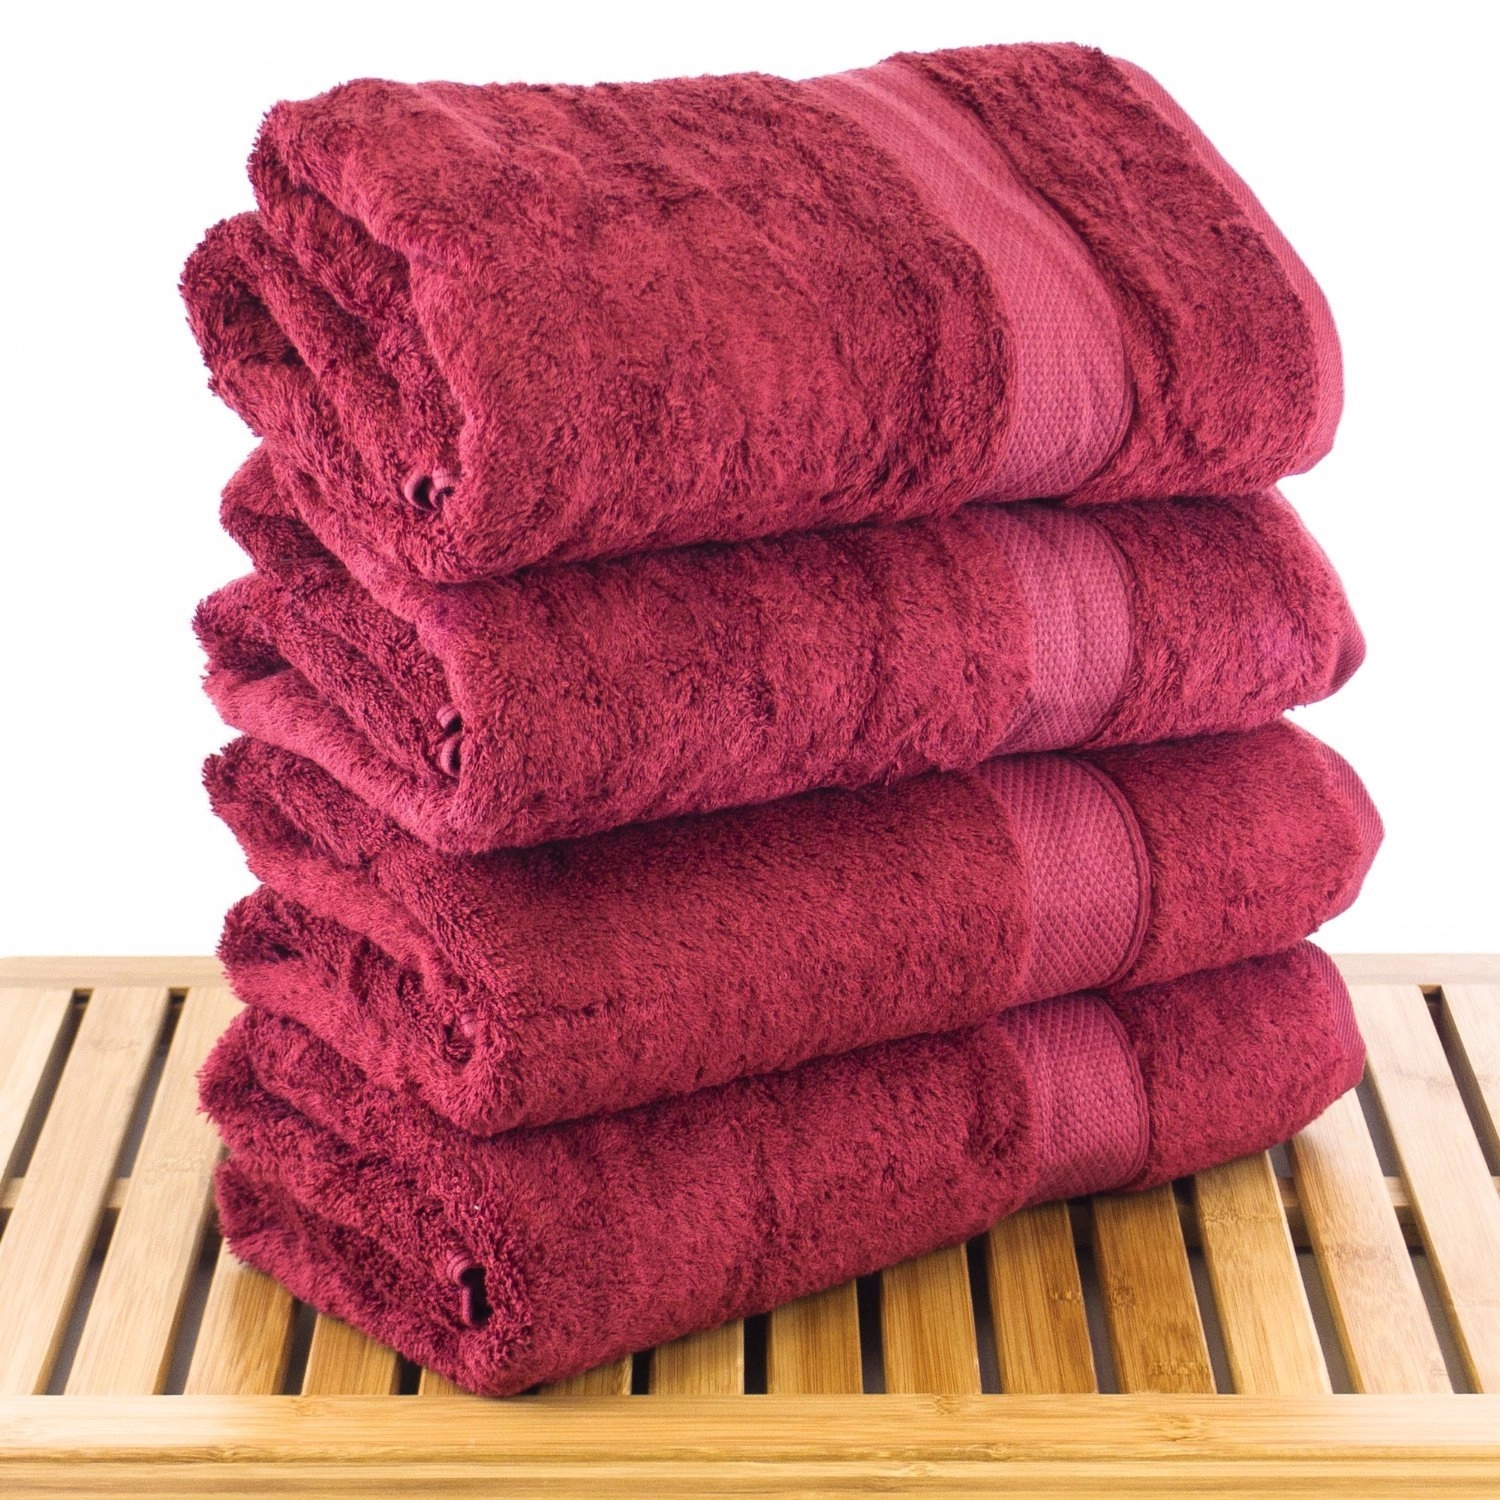 Wholesale Bath Towels Luxury Hotel Bath Towel /Cotton SPA Towel